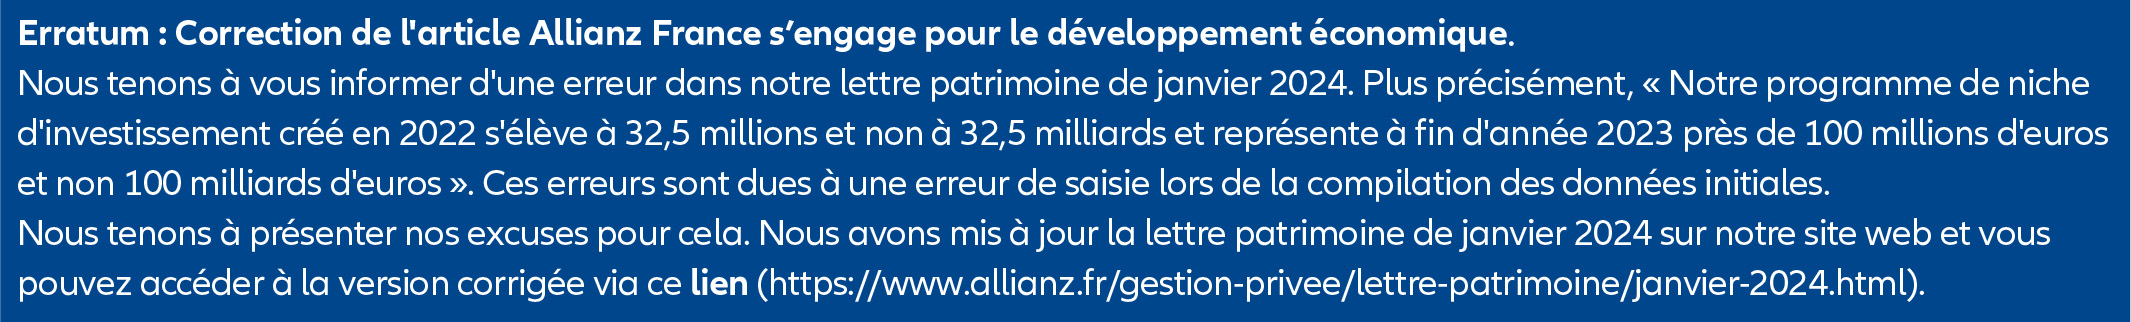 https://www.allianz.fr/gestion-privee/lettre-patrimoine/janvier-2024.html